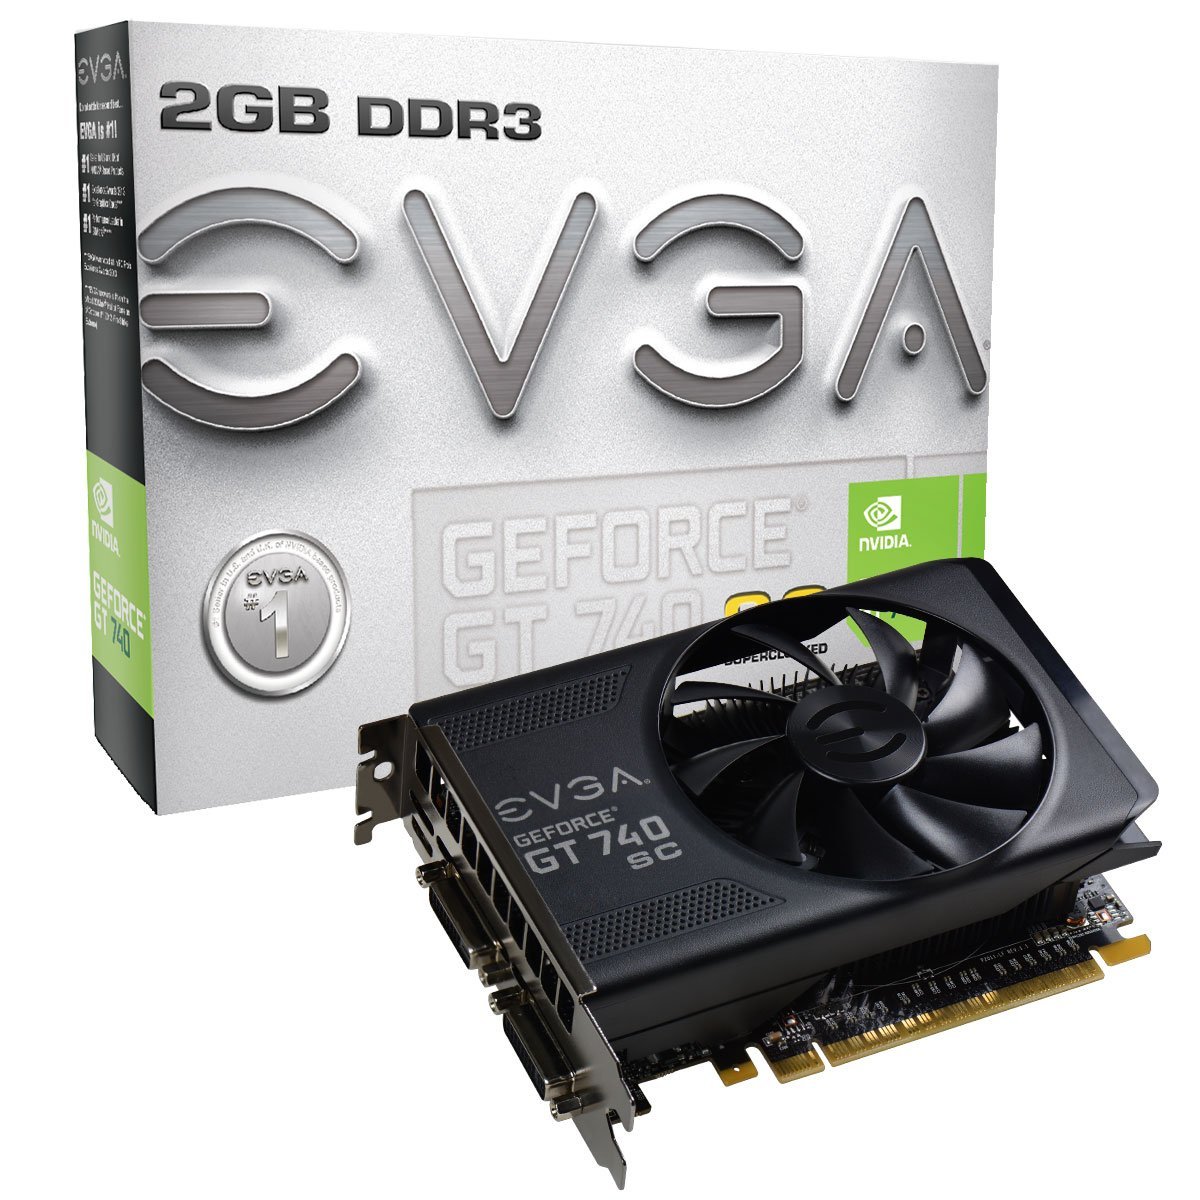 Evga Geforce Gt 740 02G-P4-3747-KR 2GB 128bit GDDR5 Pci Express